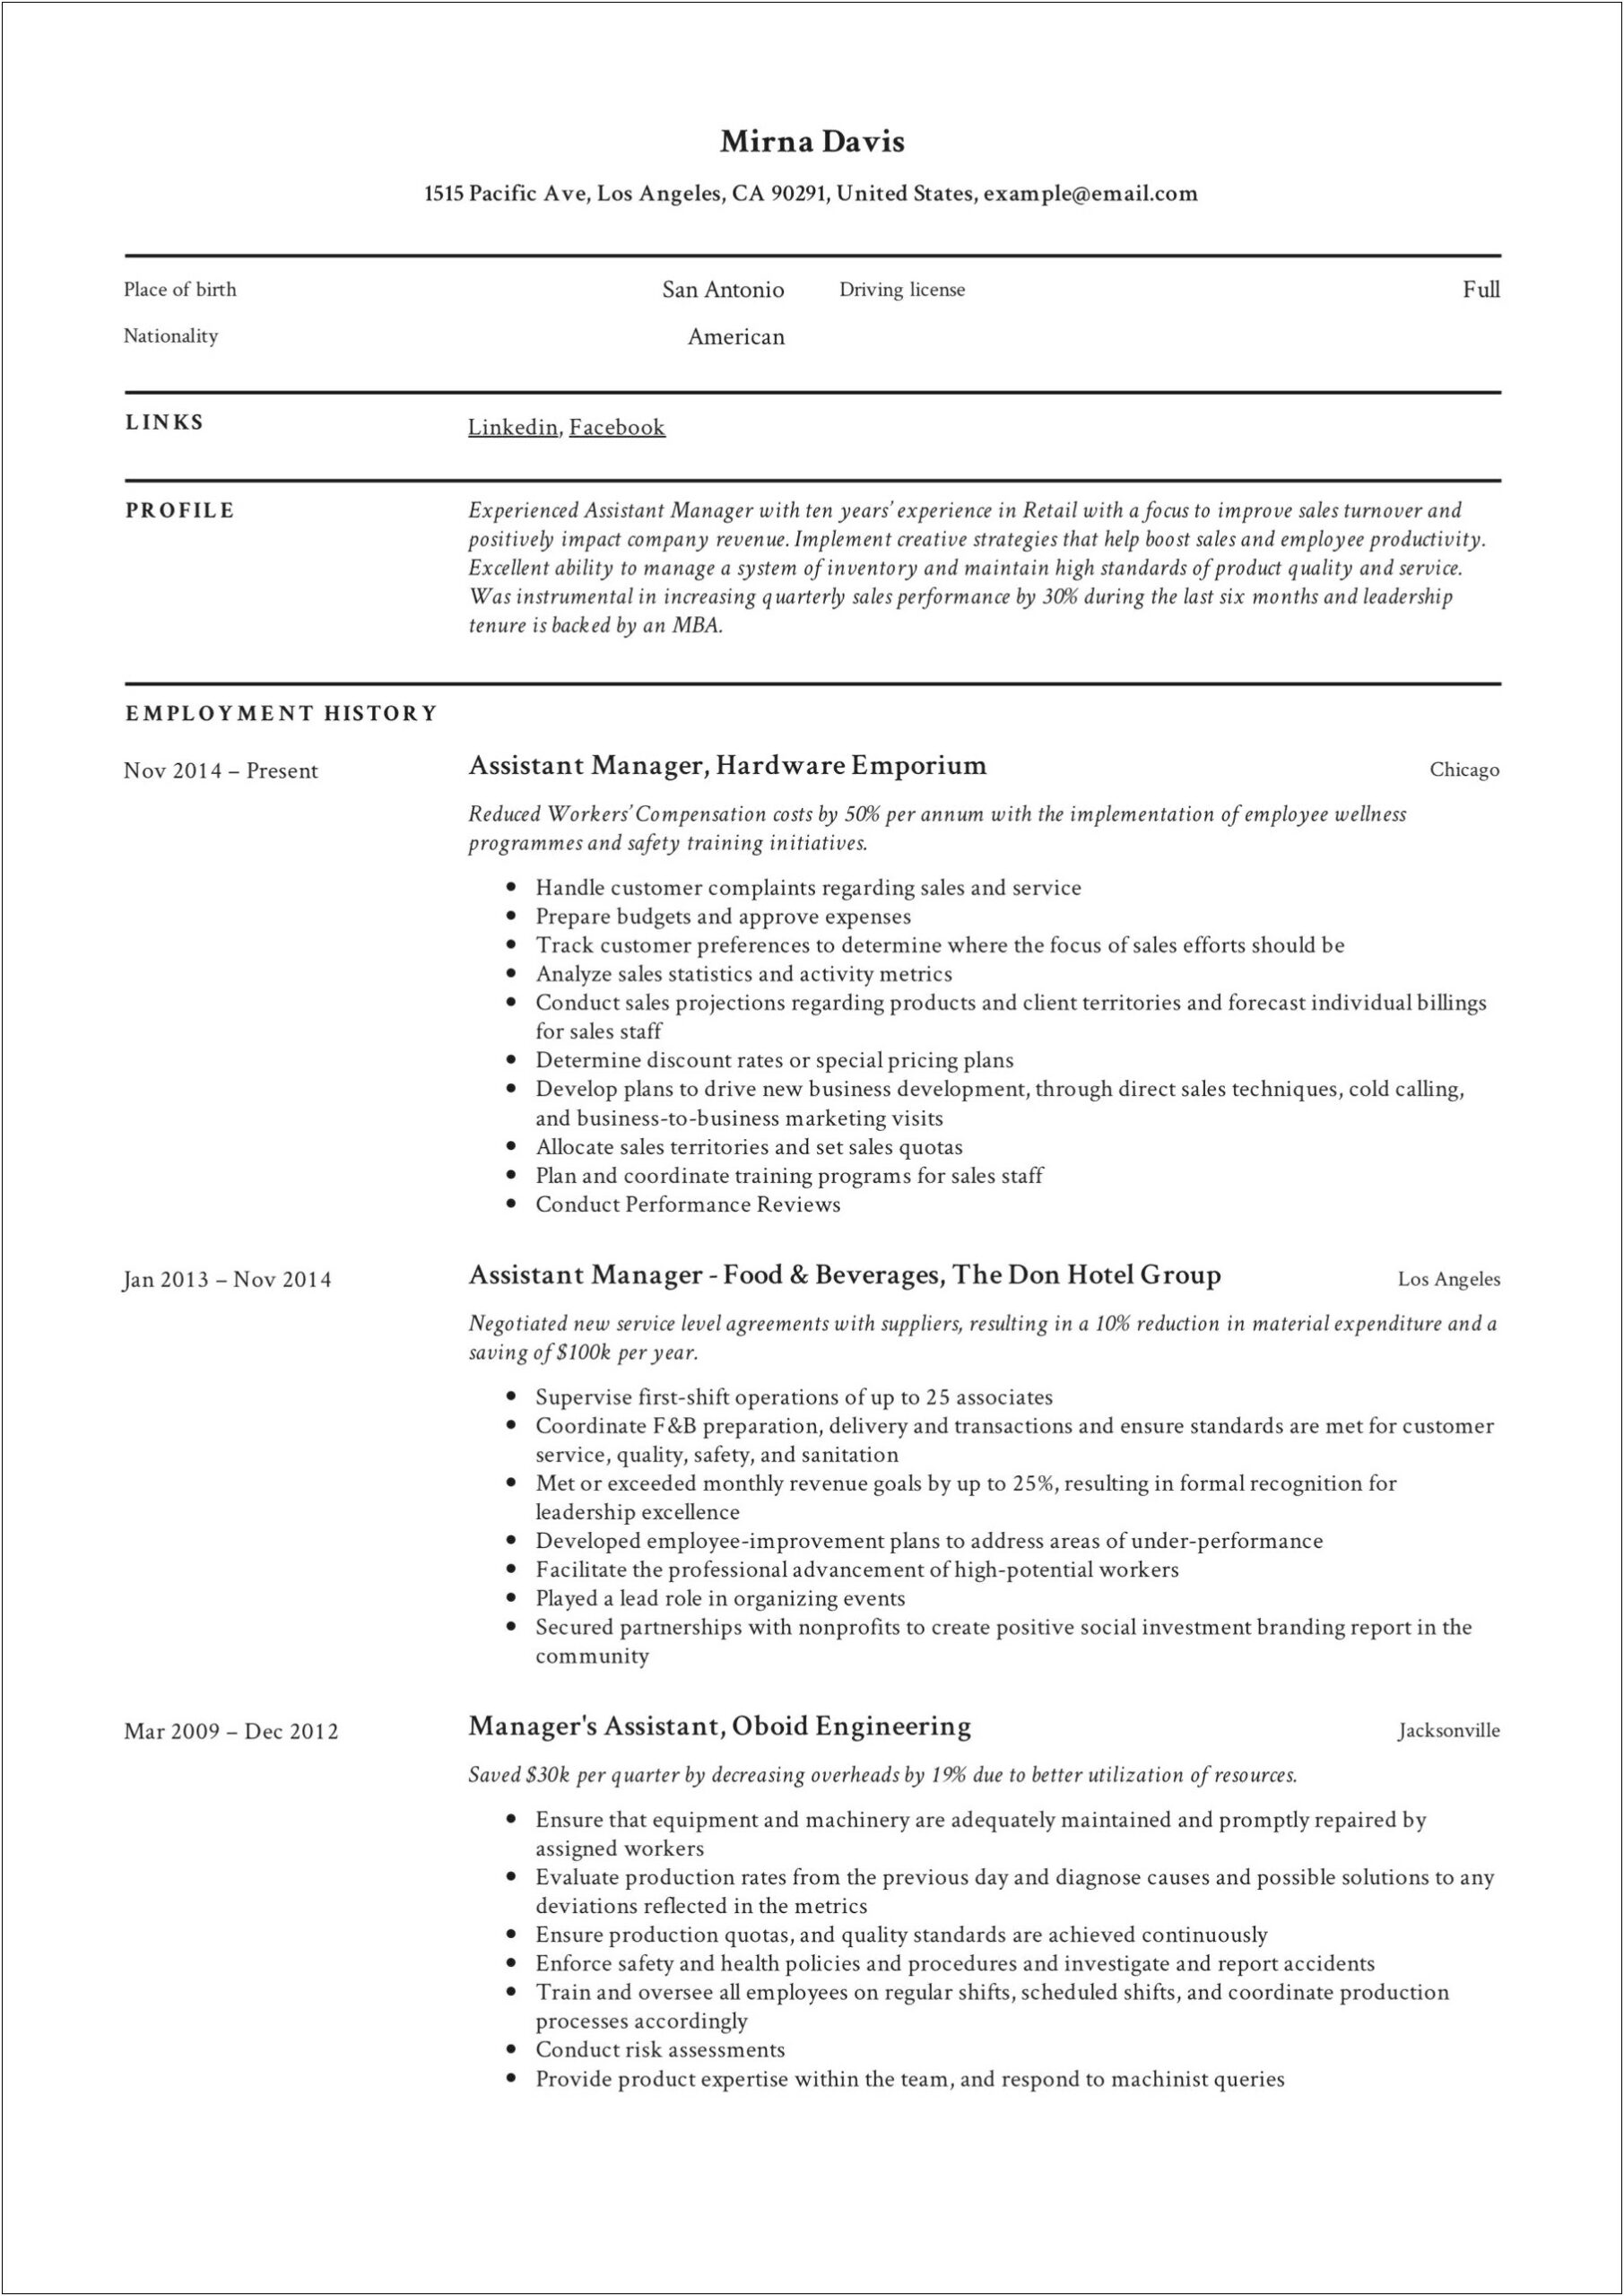 Sample Resume For Walmart Assistant Manager